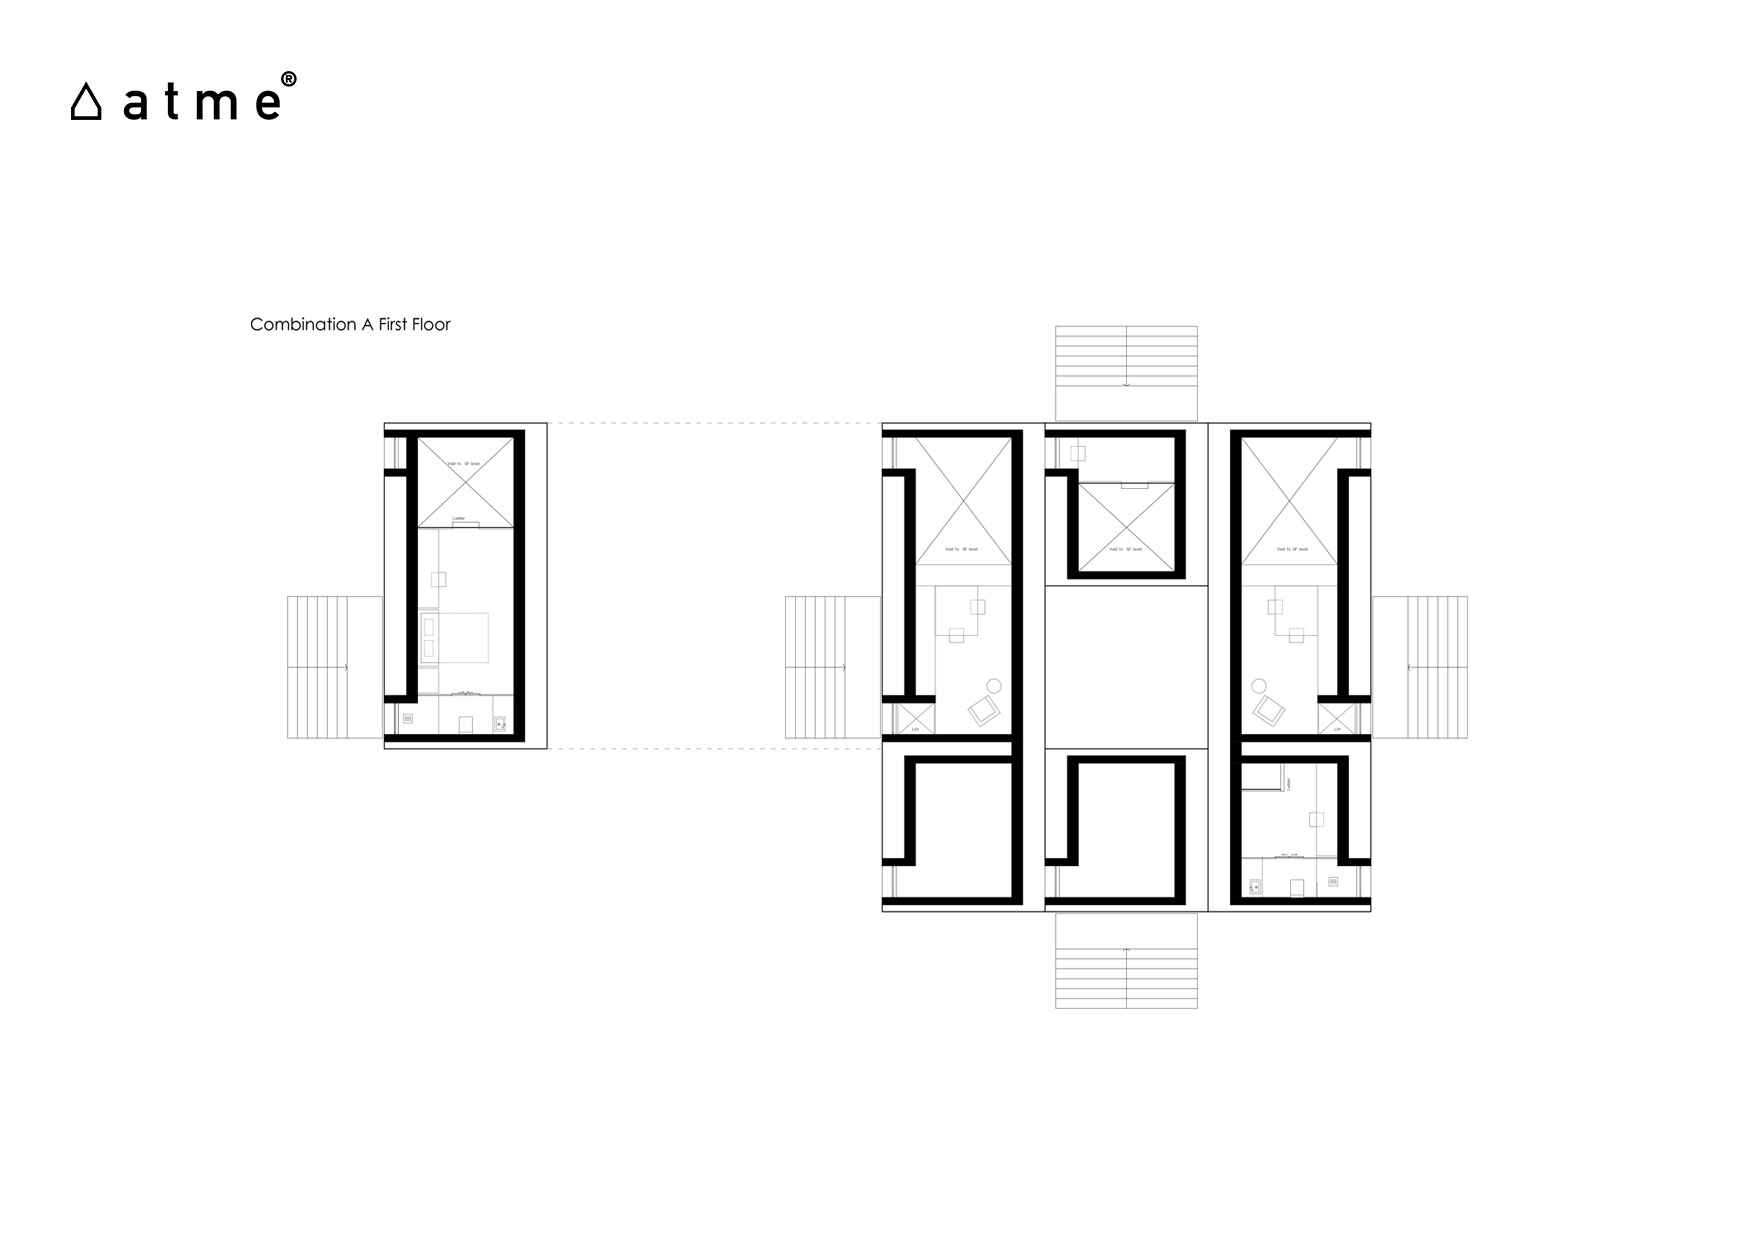 grundriss-FLOATING-A-FRAME-HOUSE-bungalow-atrium